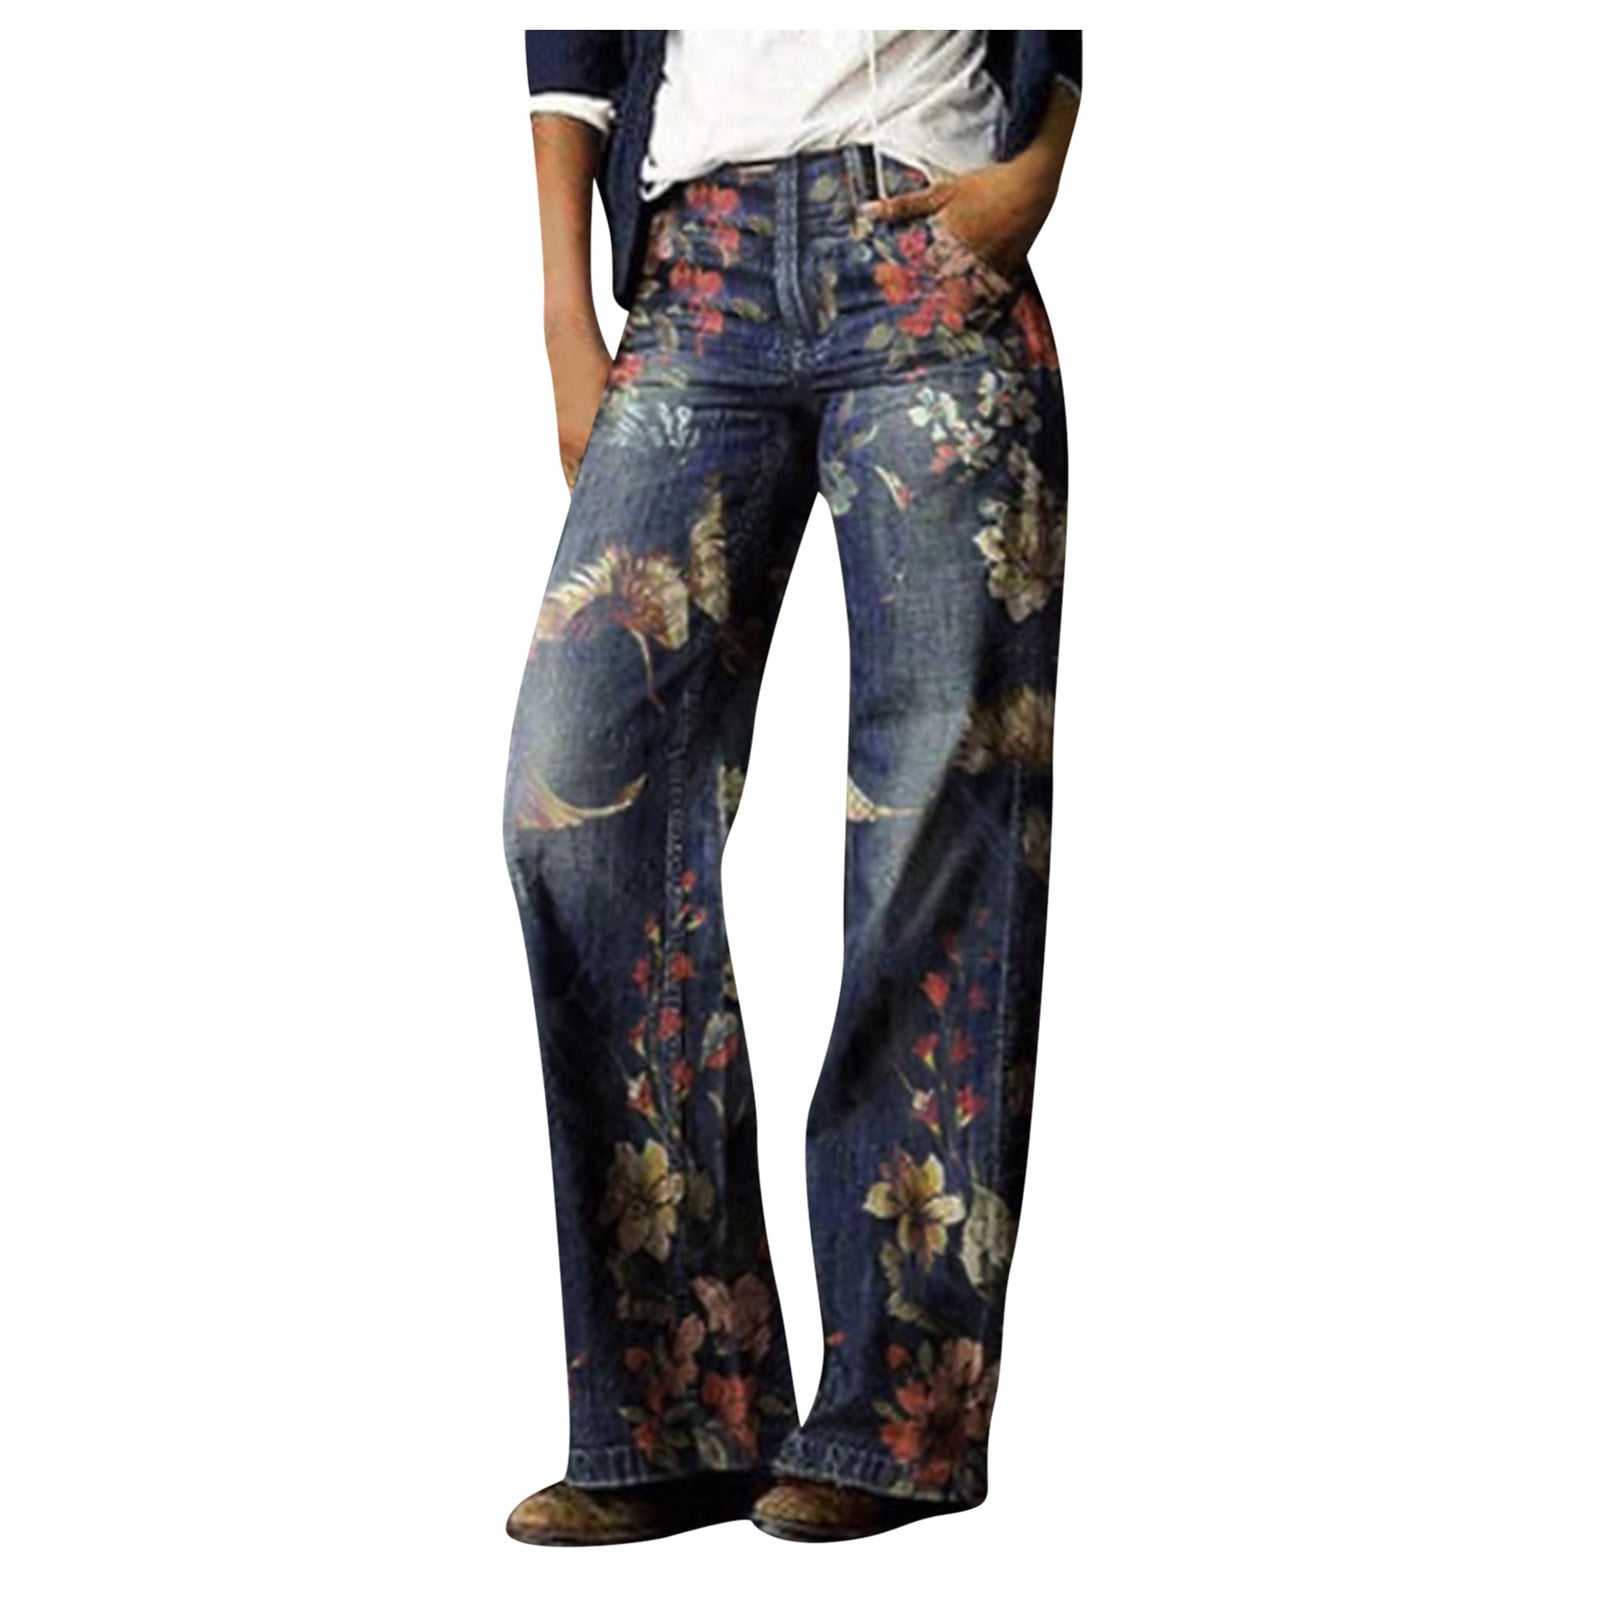 wefuesd jeans for women pants for women women fashion printed jeans casual long pants women's pants blue m -